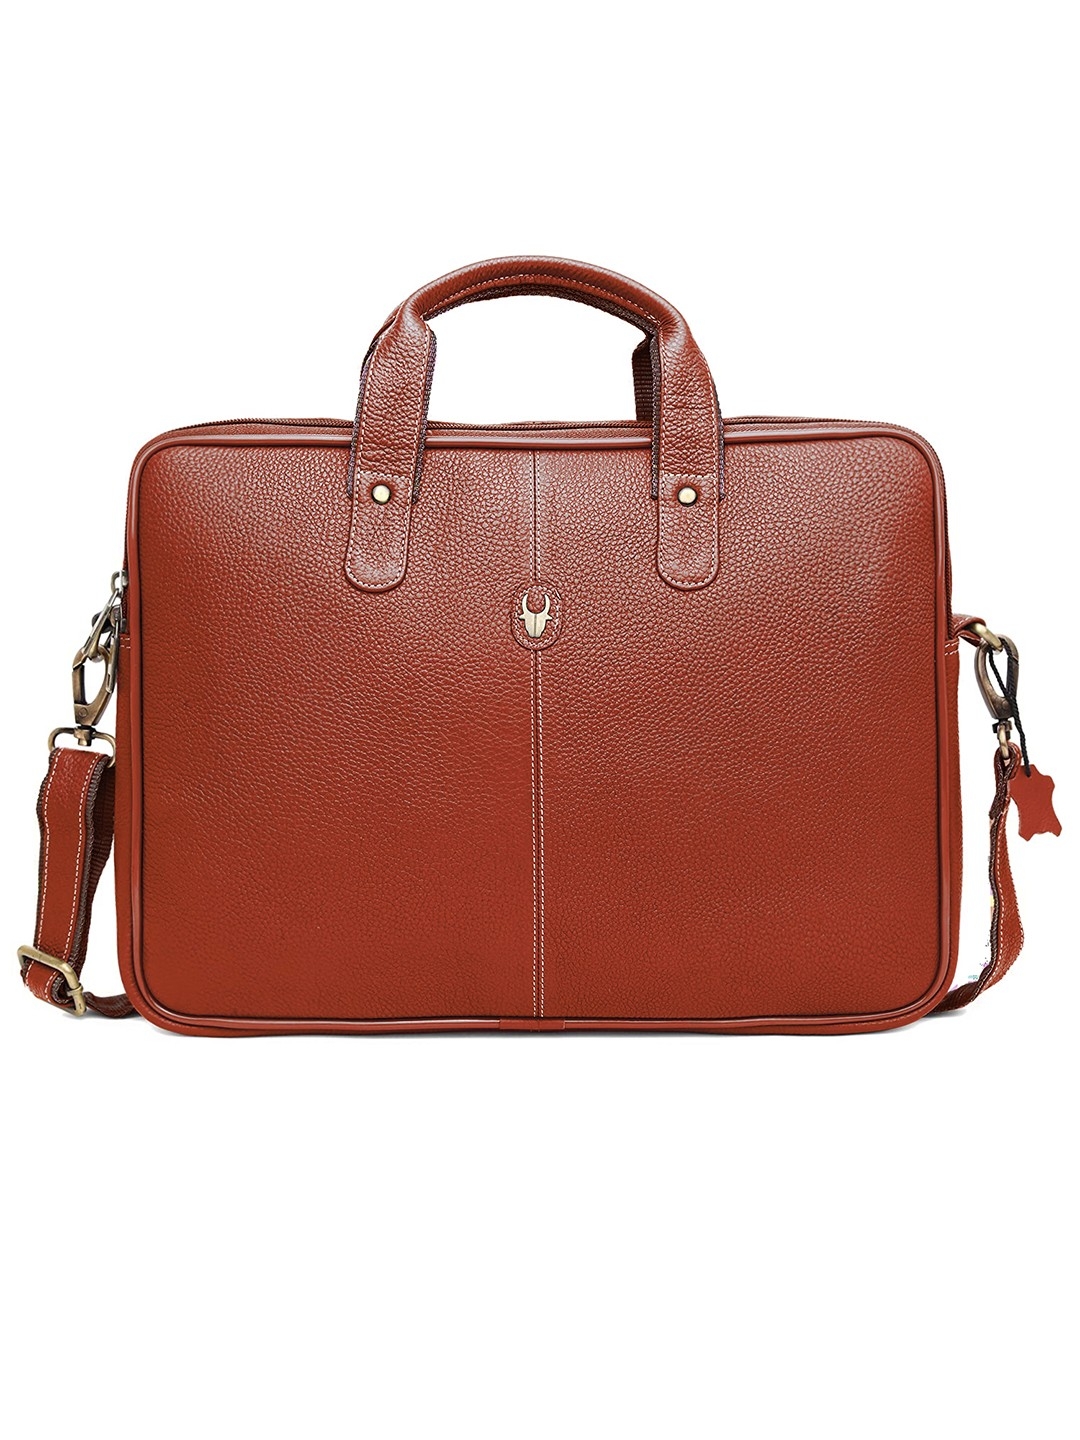 WildHorn | WildHorn Tan Leather Laptop Messenger Bag for Men| Padded Laptop Compartment |Office Bag 